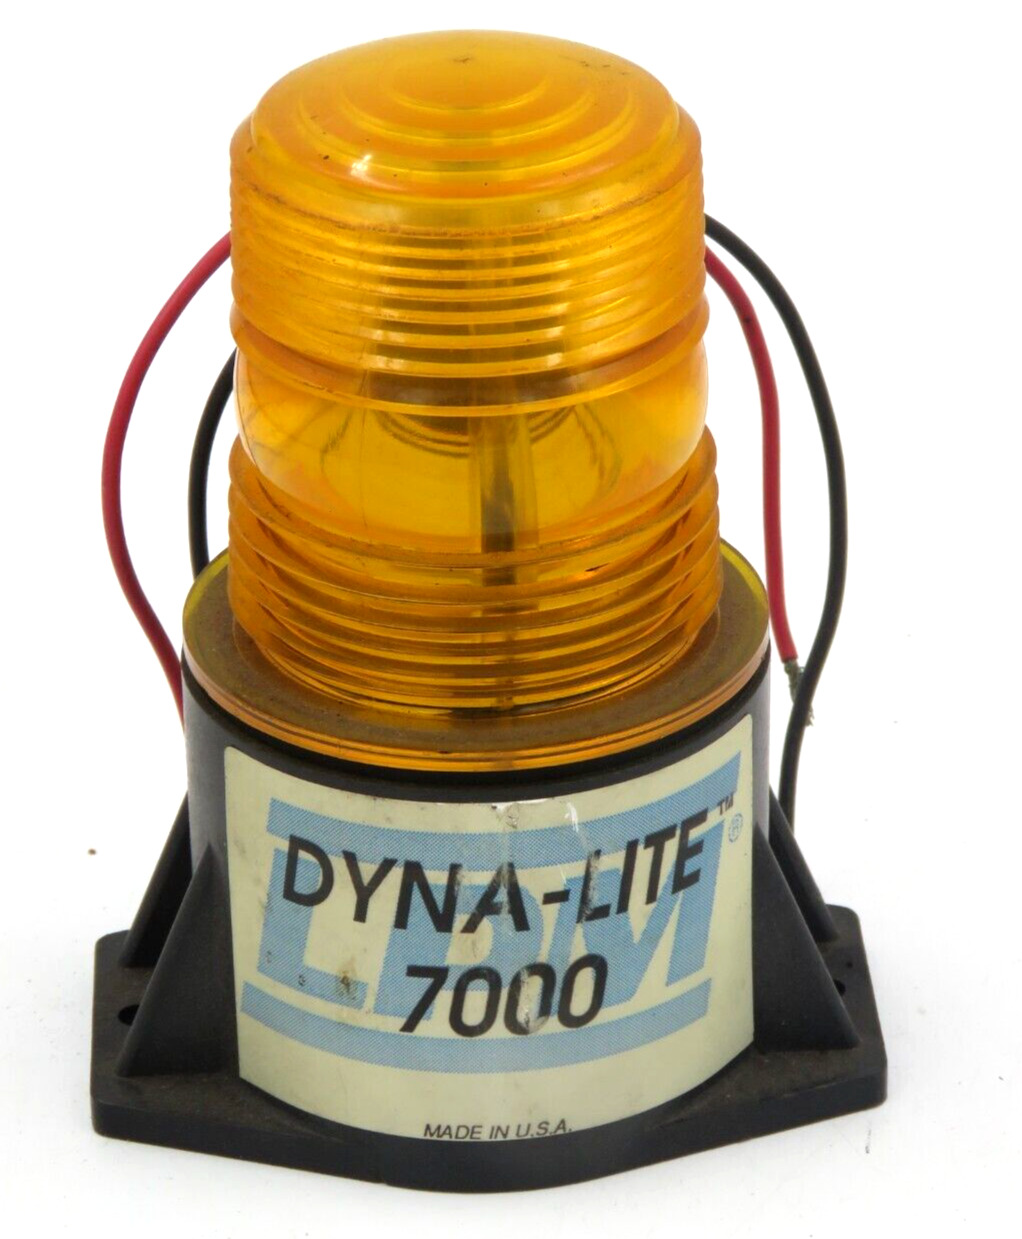 LPM DYNA-LITE 7000 STROBE LIGHT ORANGE 12-80V VINTAGE - MADE IN USA